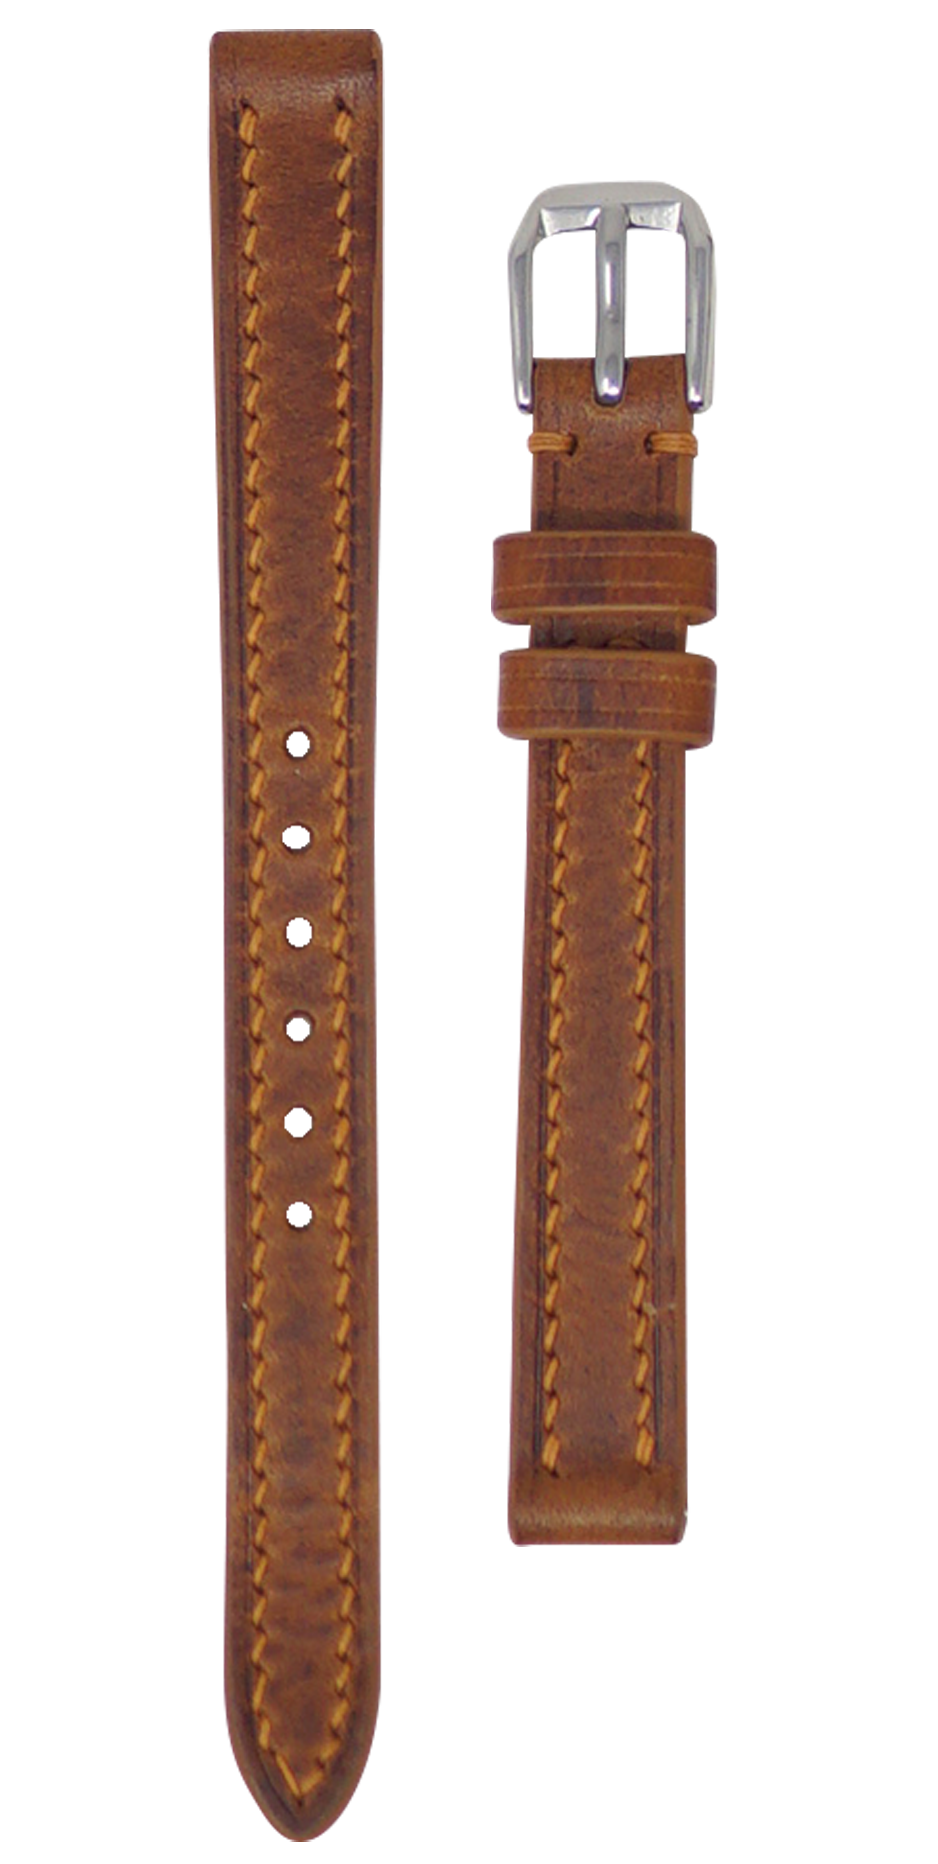 11mm Watch Strap - Cognac Badalassi Wax Leather